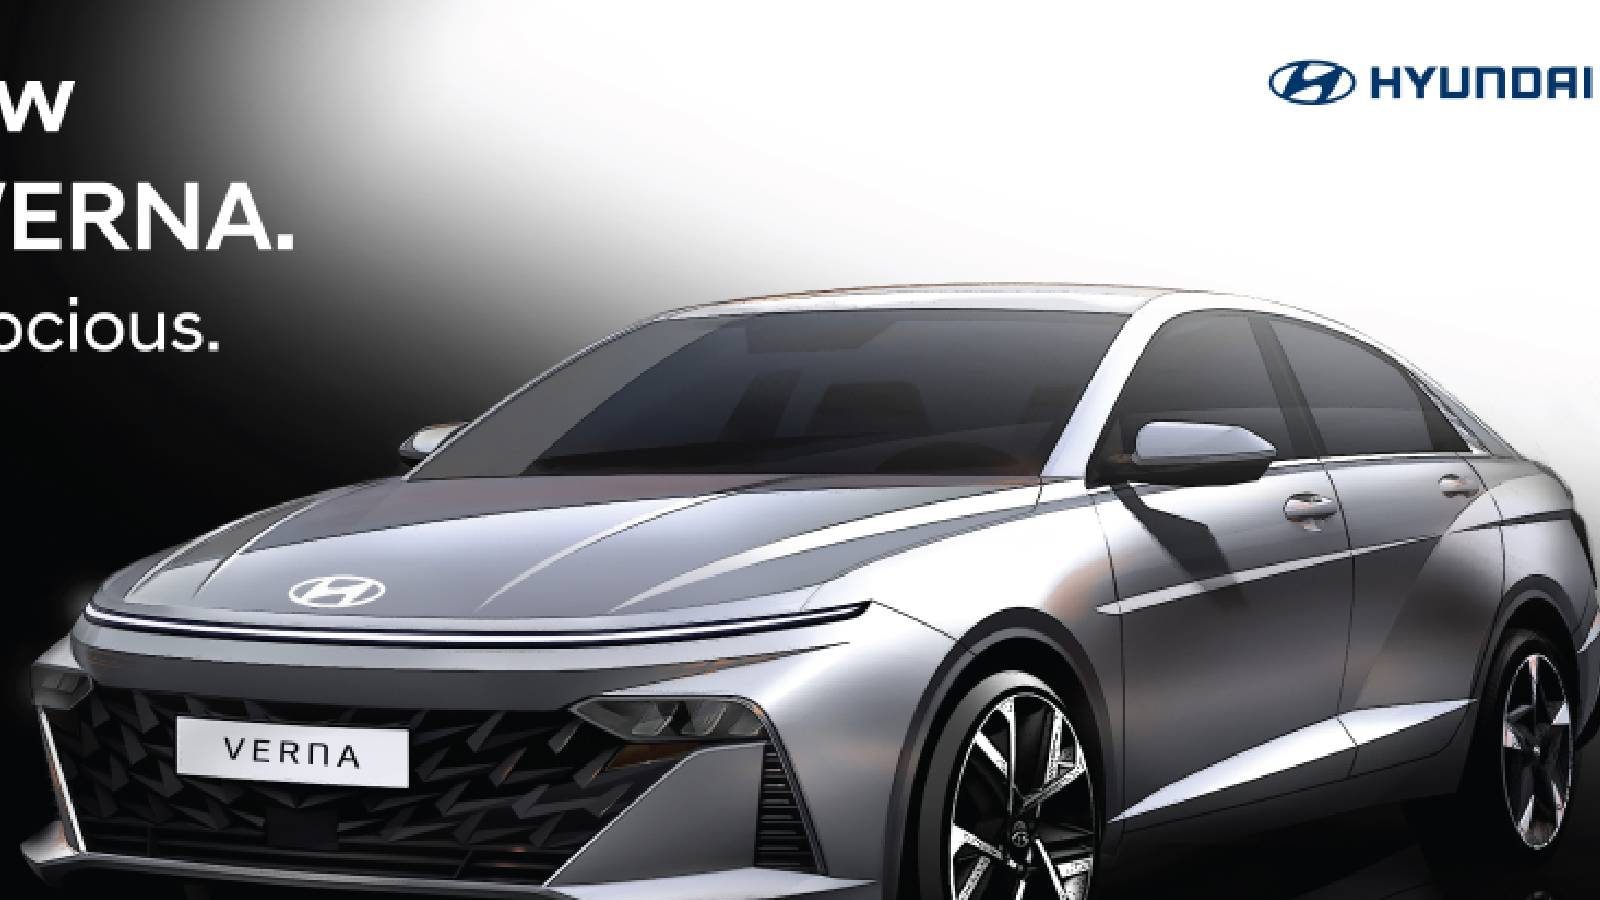 Hyundai Verna EX Base Variant Arrives - First Look Walkaround